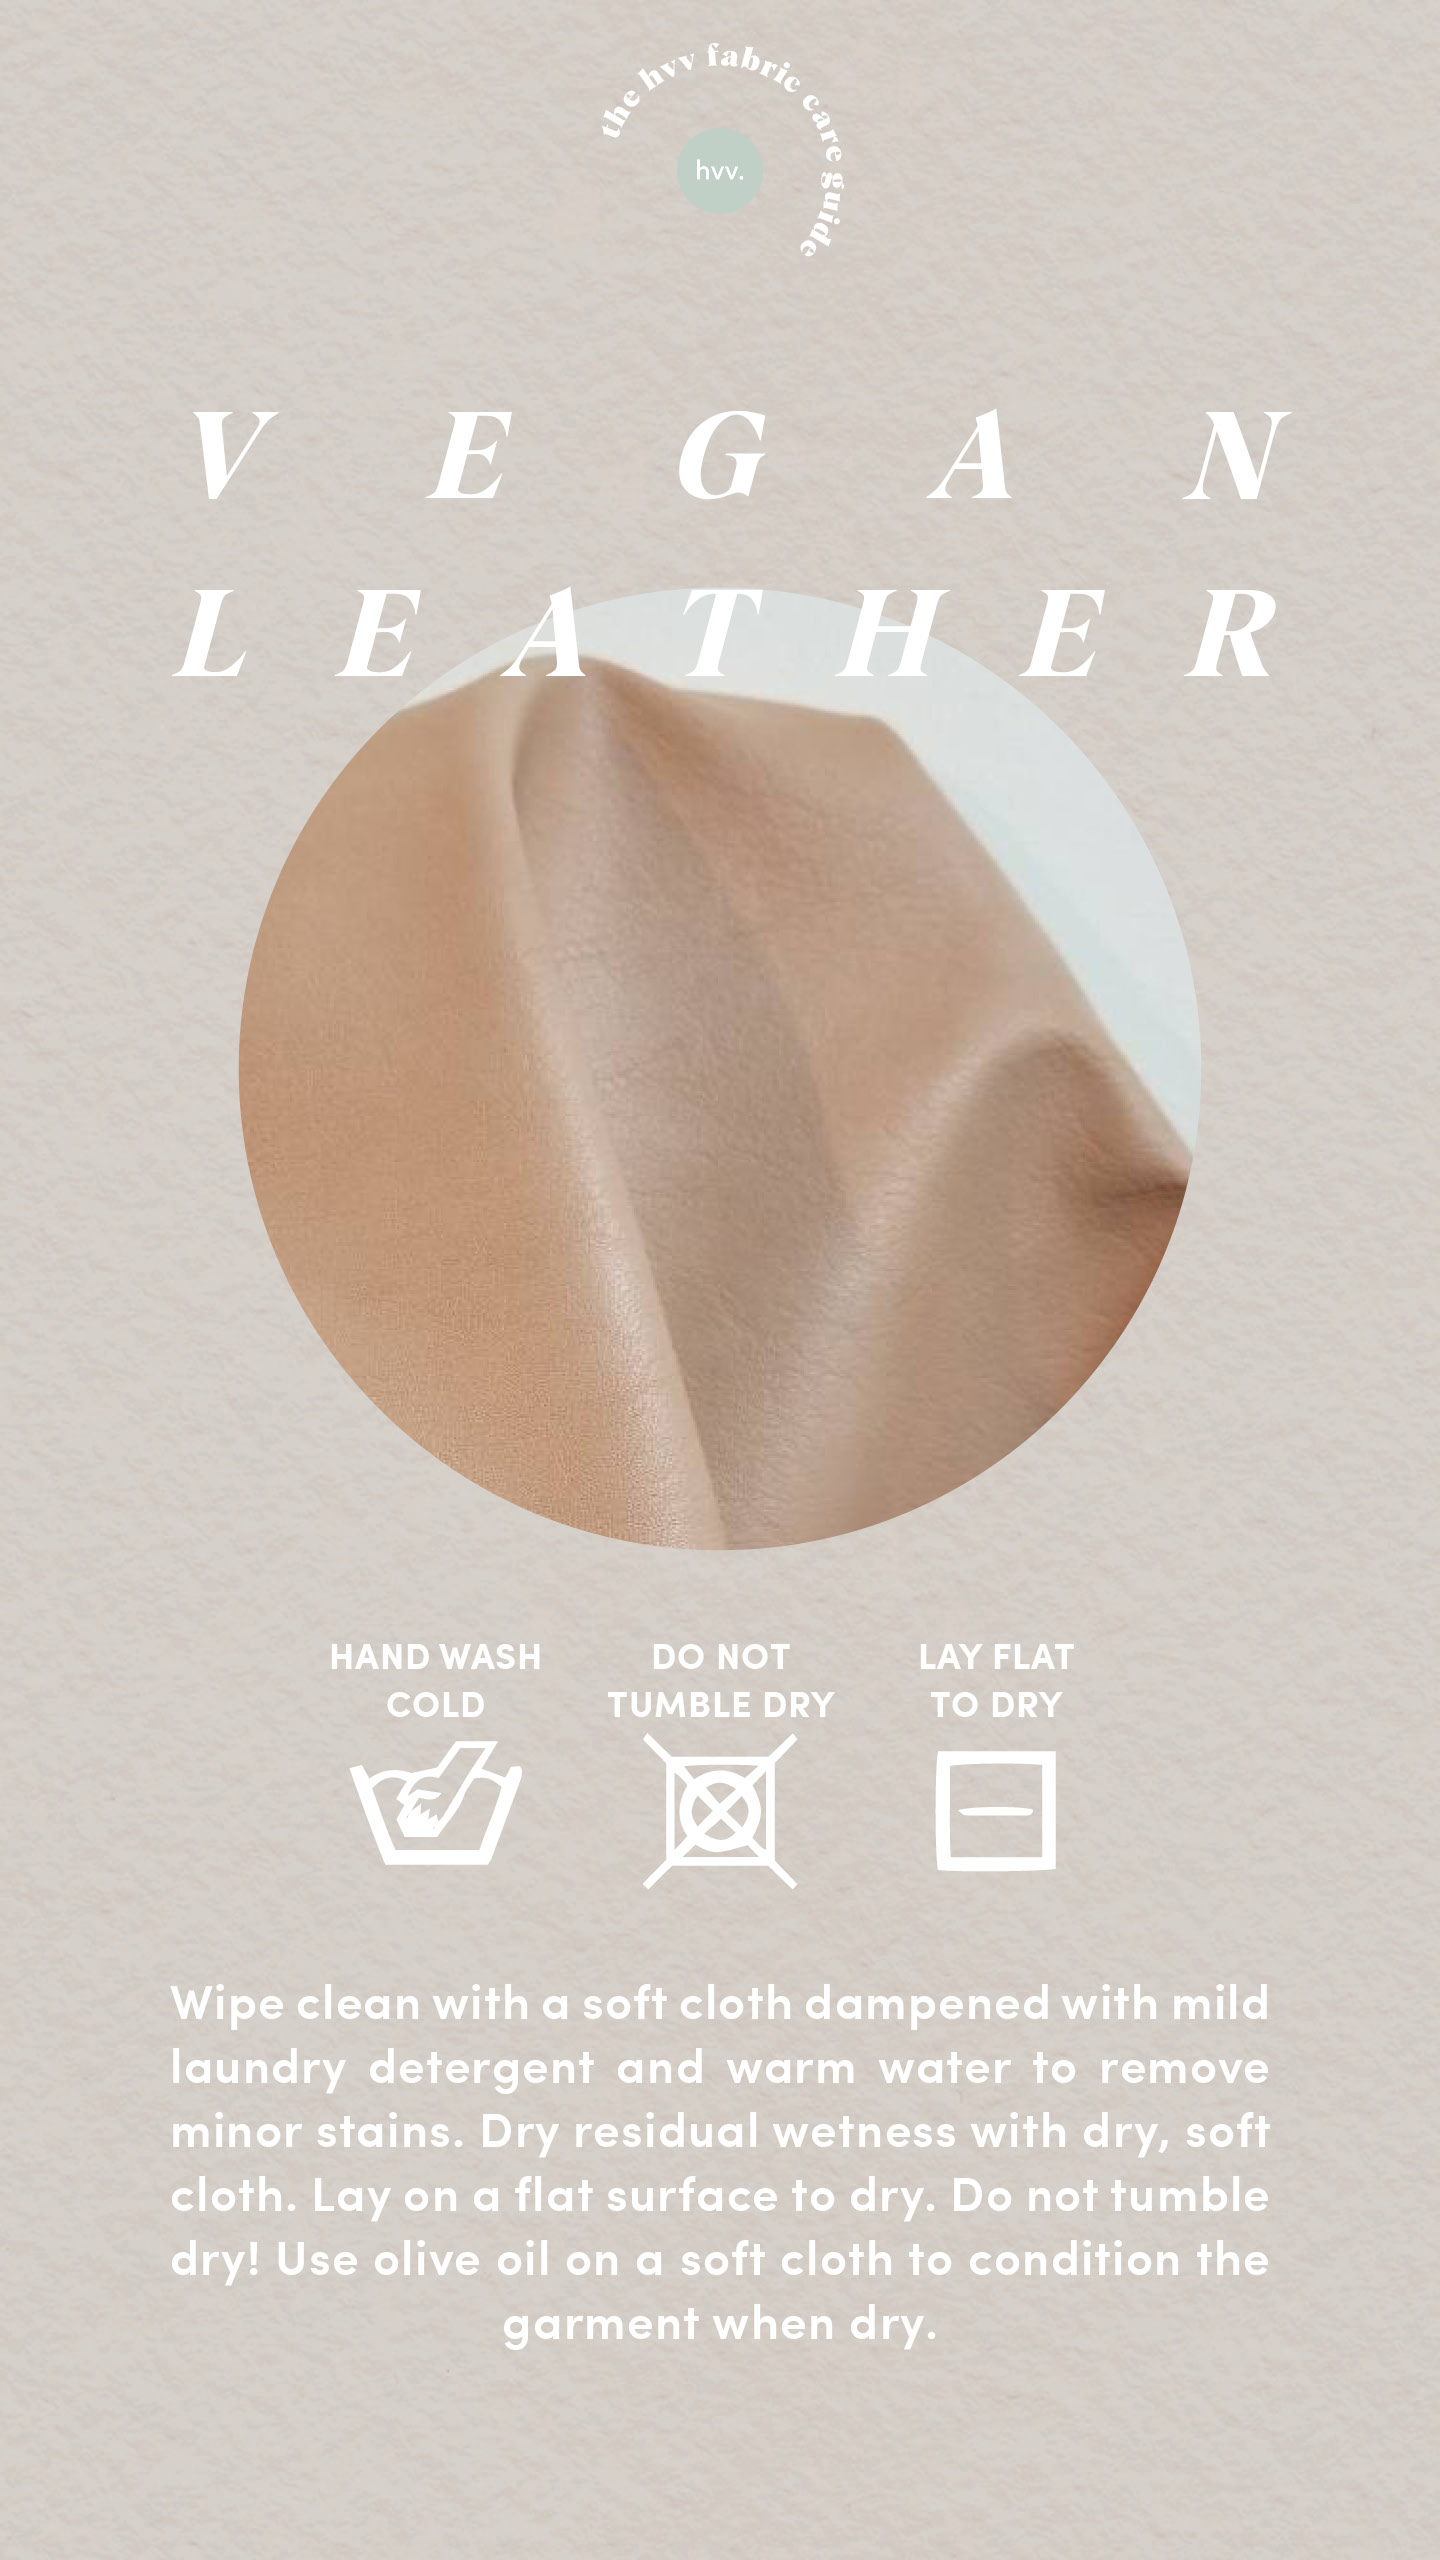 Vegan Leather Fabric Care Guide